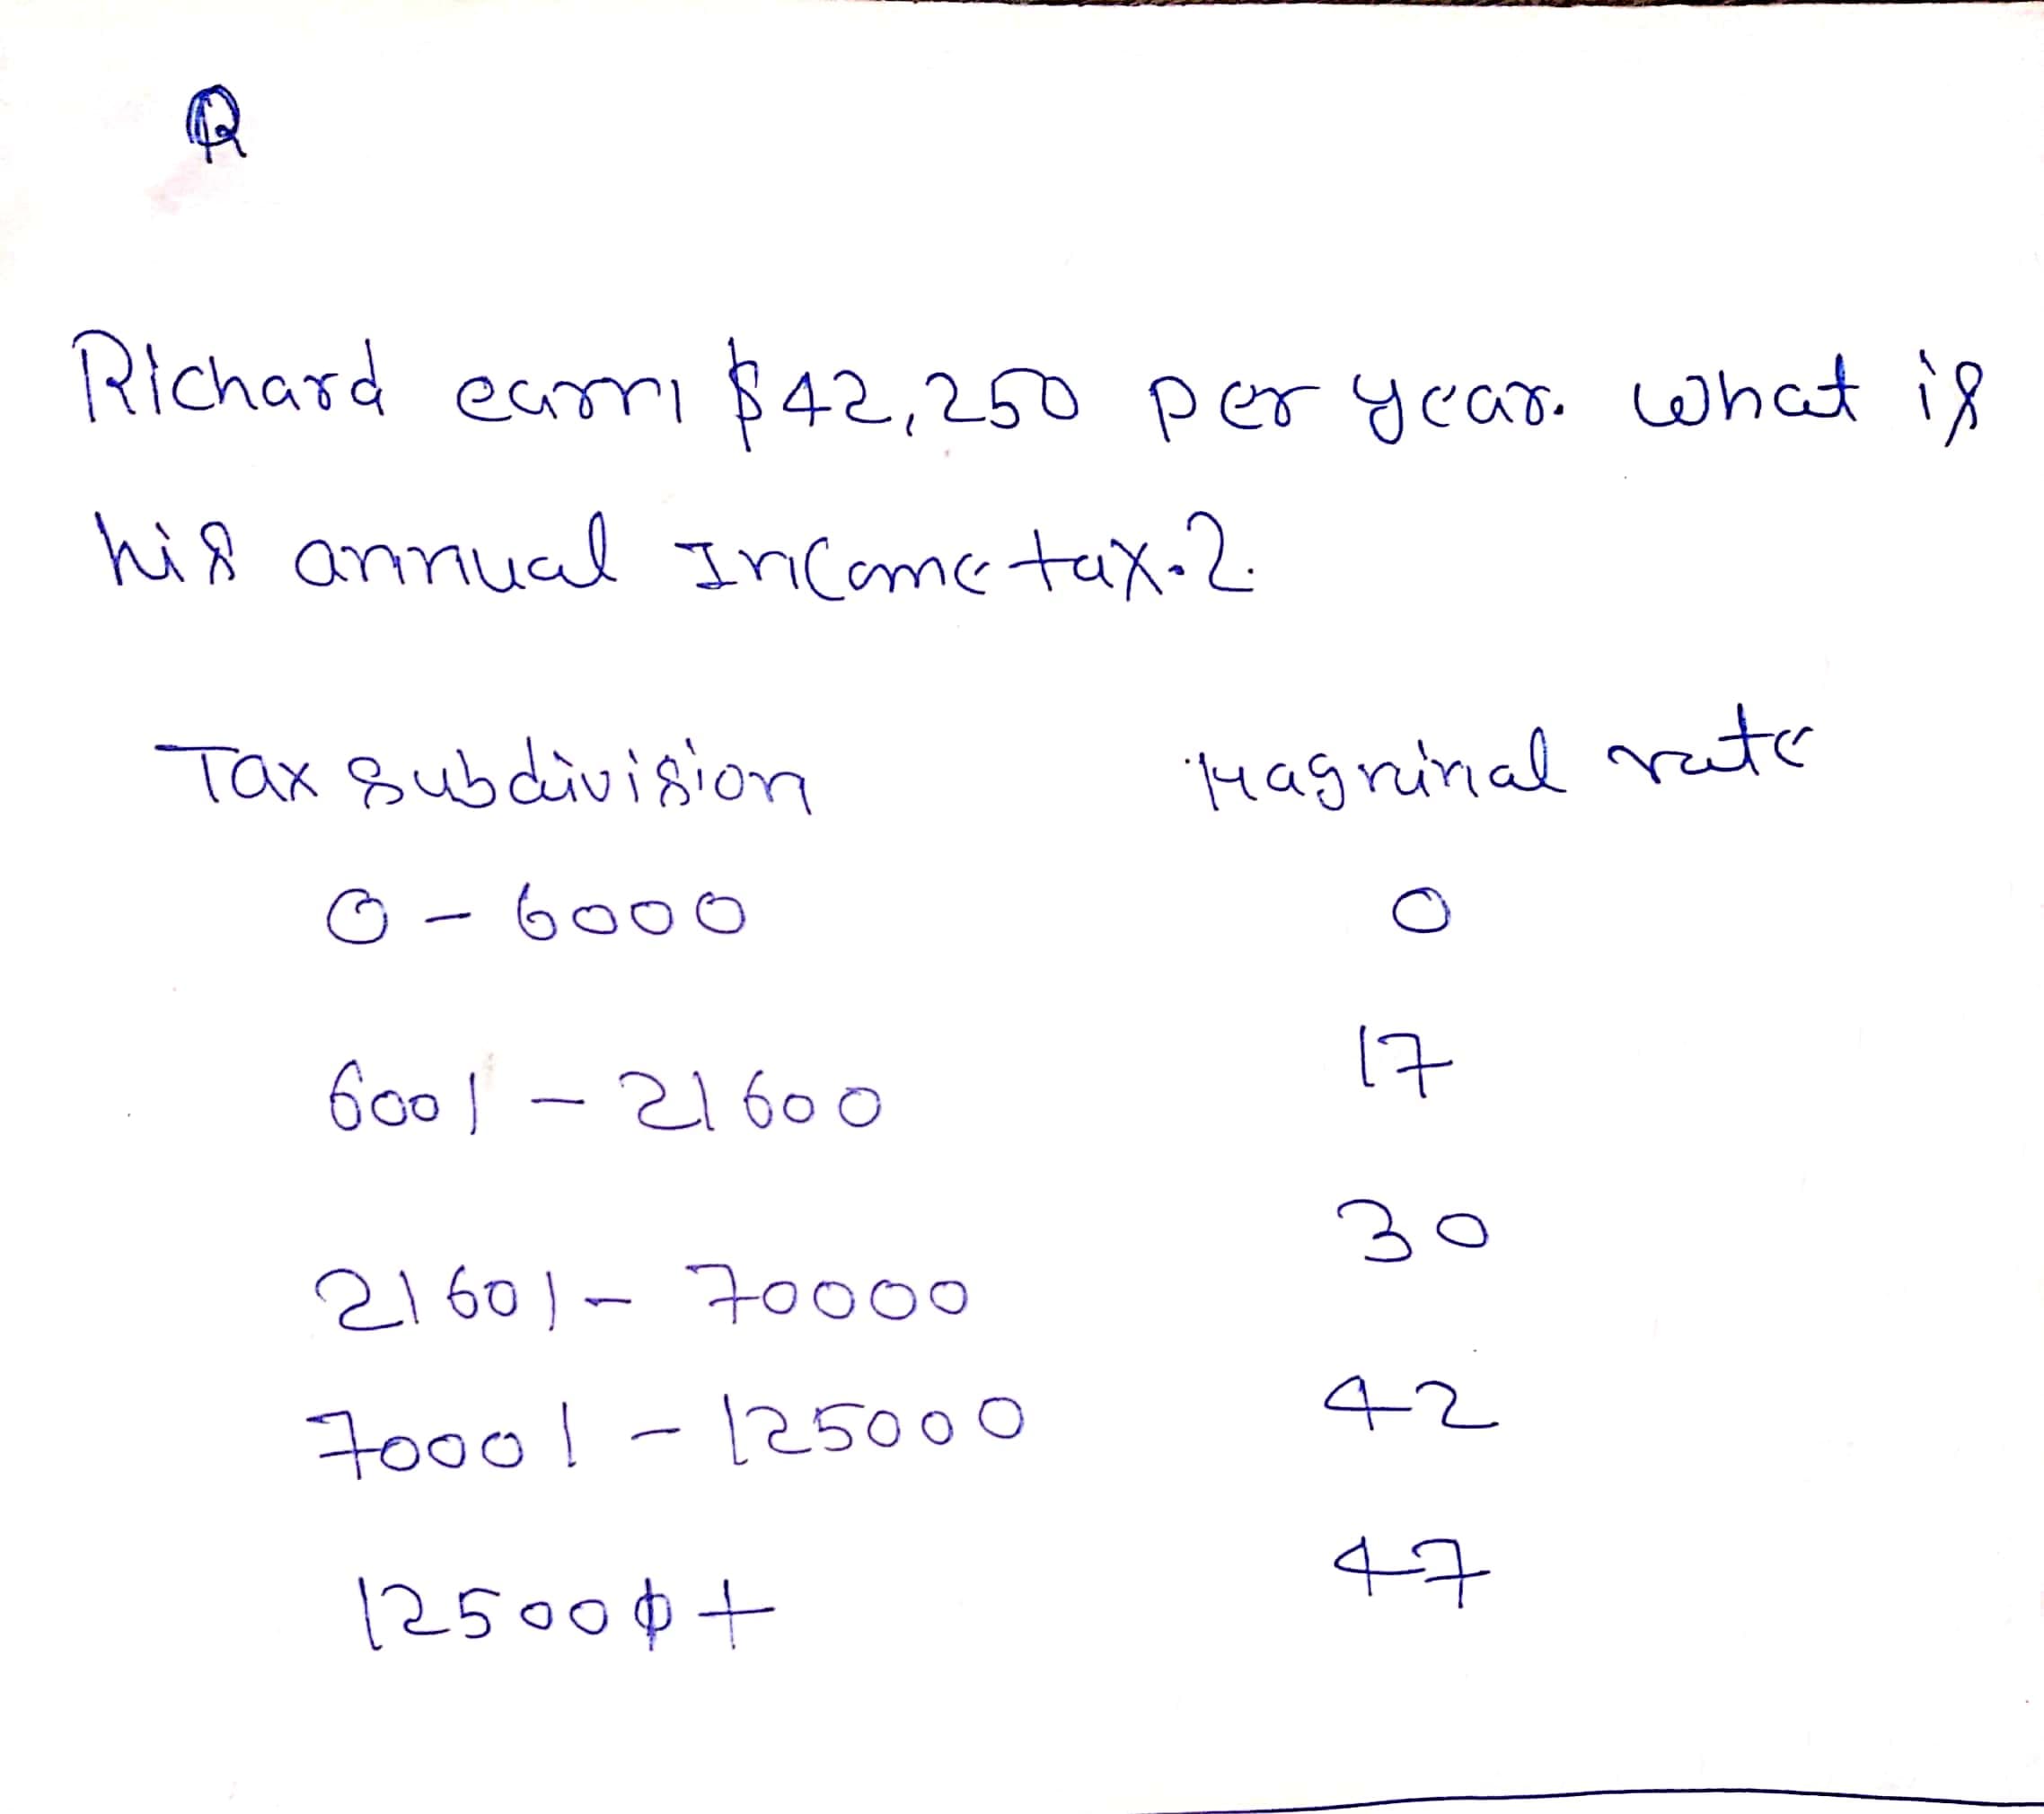 Richard
eami $42,250 perycao. what i8
hi8 annual Income tax-2
